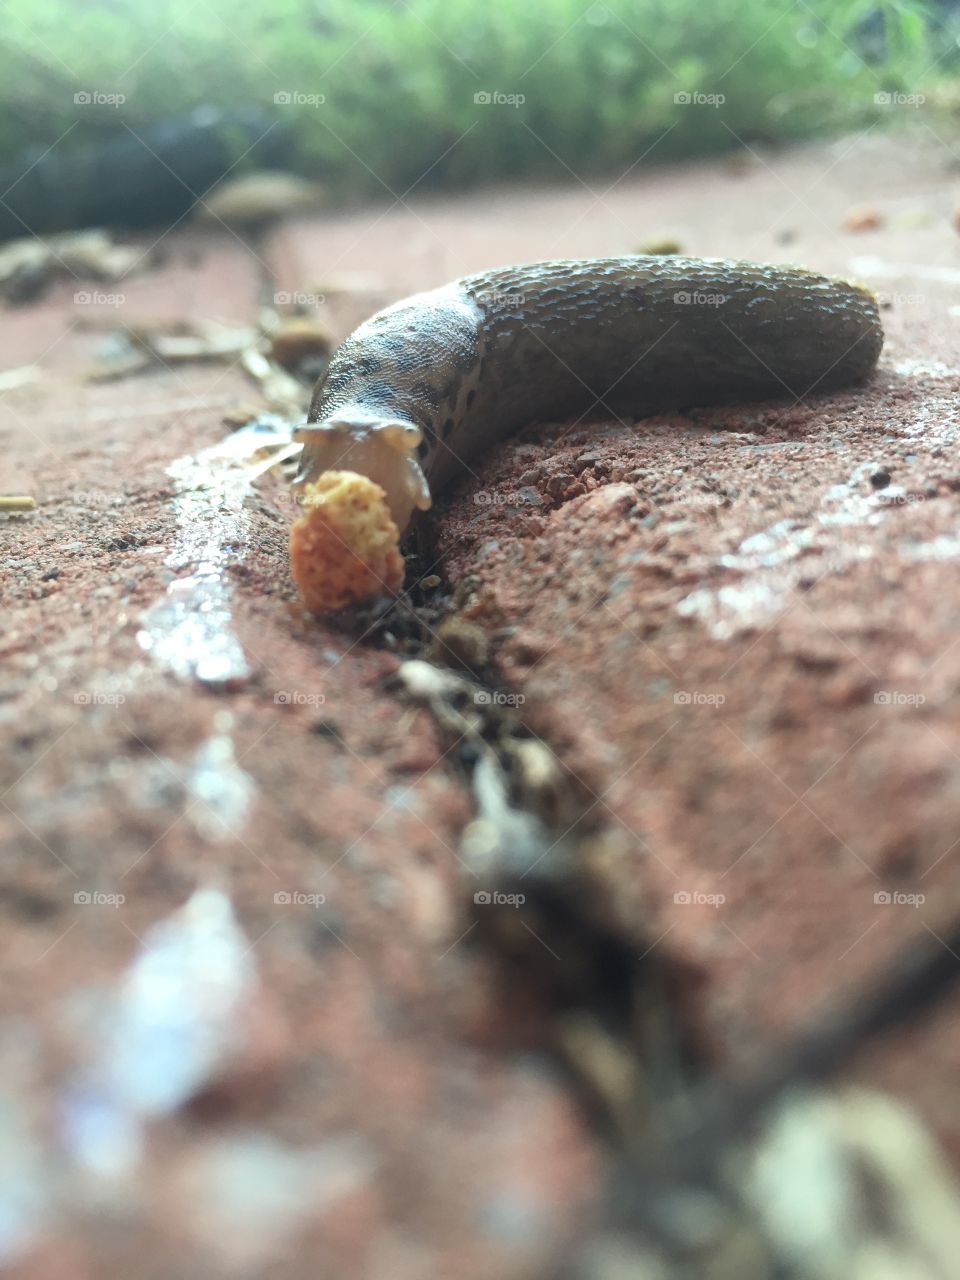 Slug eating cat food, morning patio 